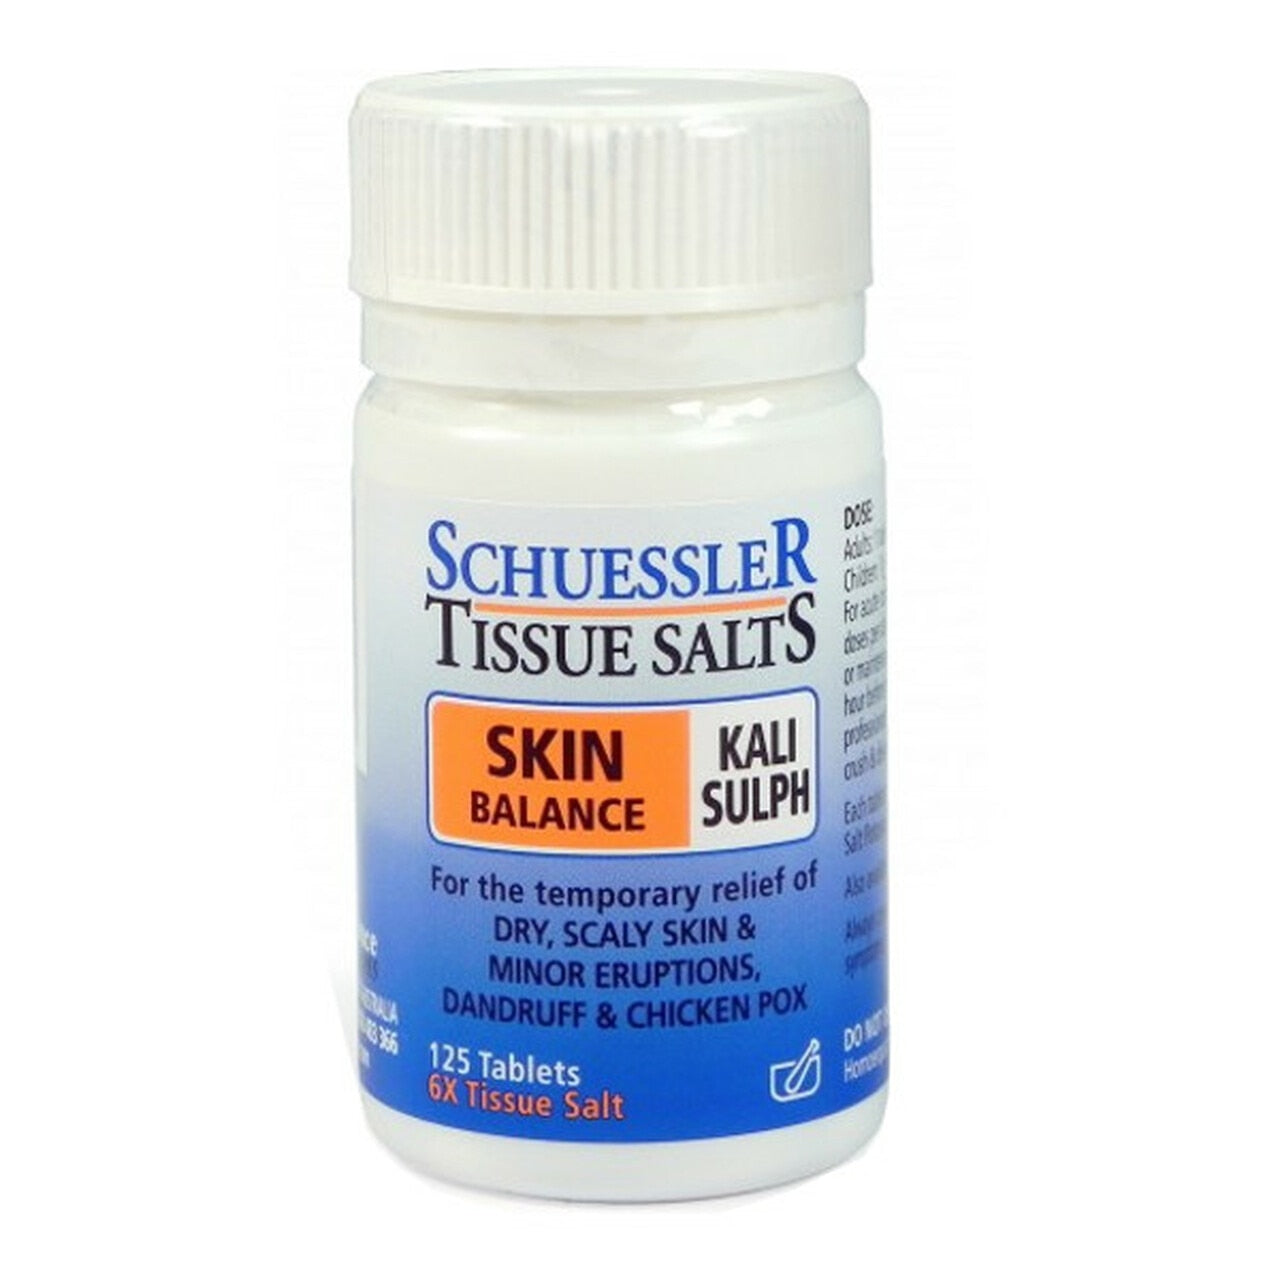 Schuessler - Salts Kali Sulph - [125]